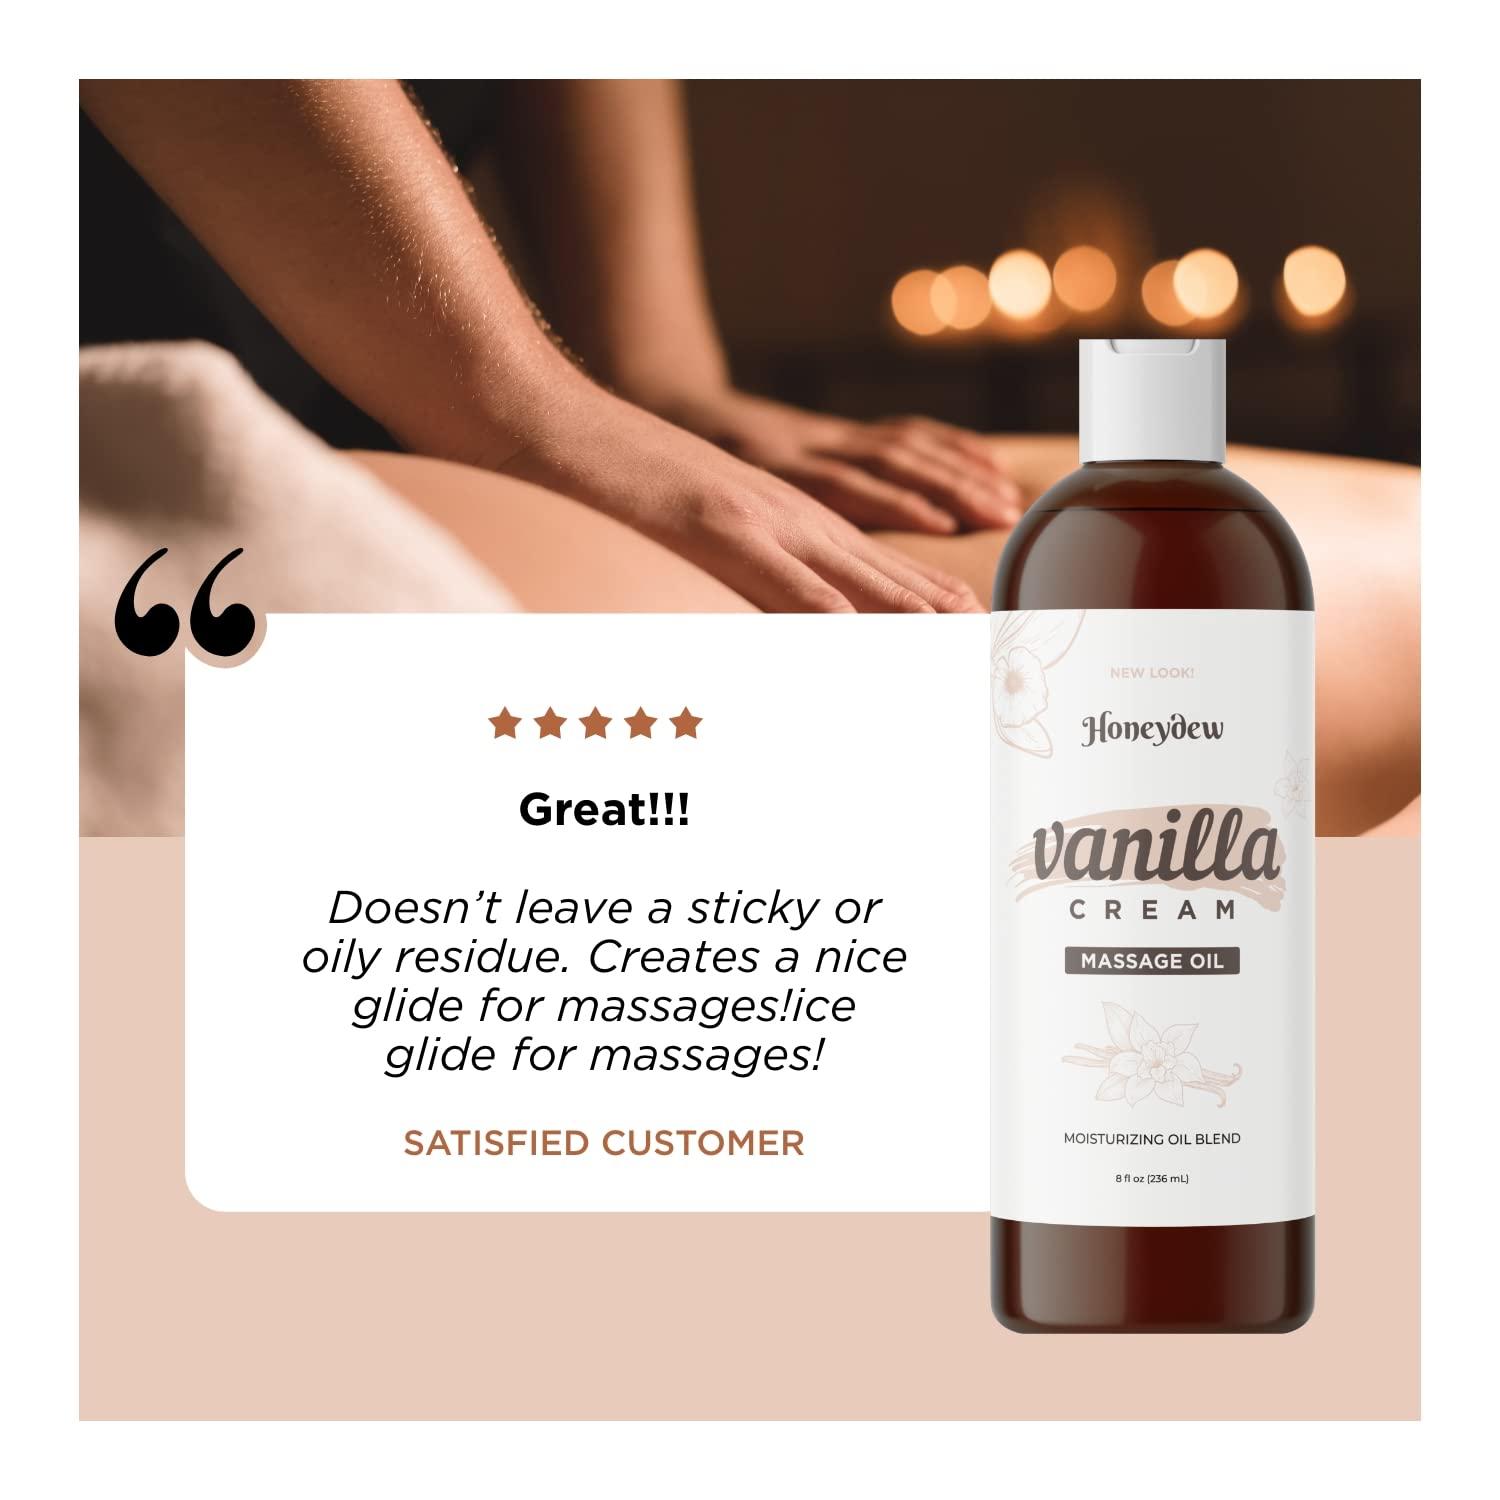 Sweet Vanilla Massage Gel – Control